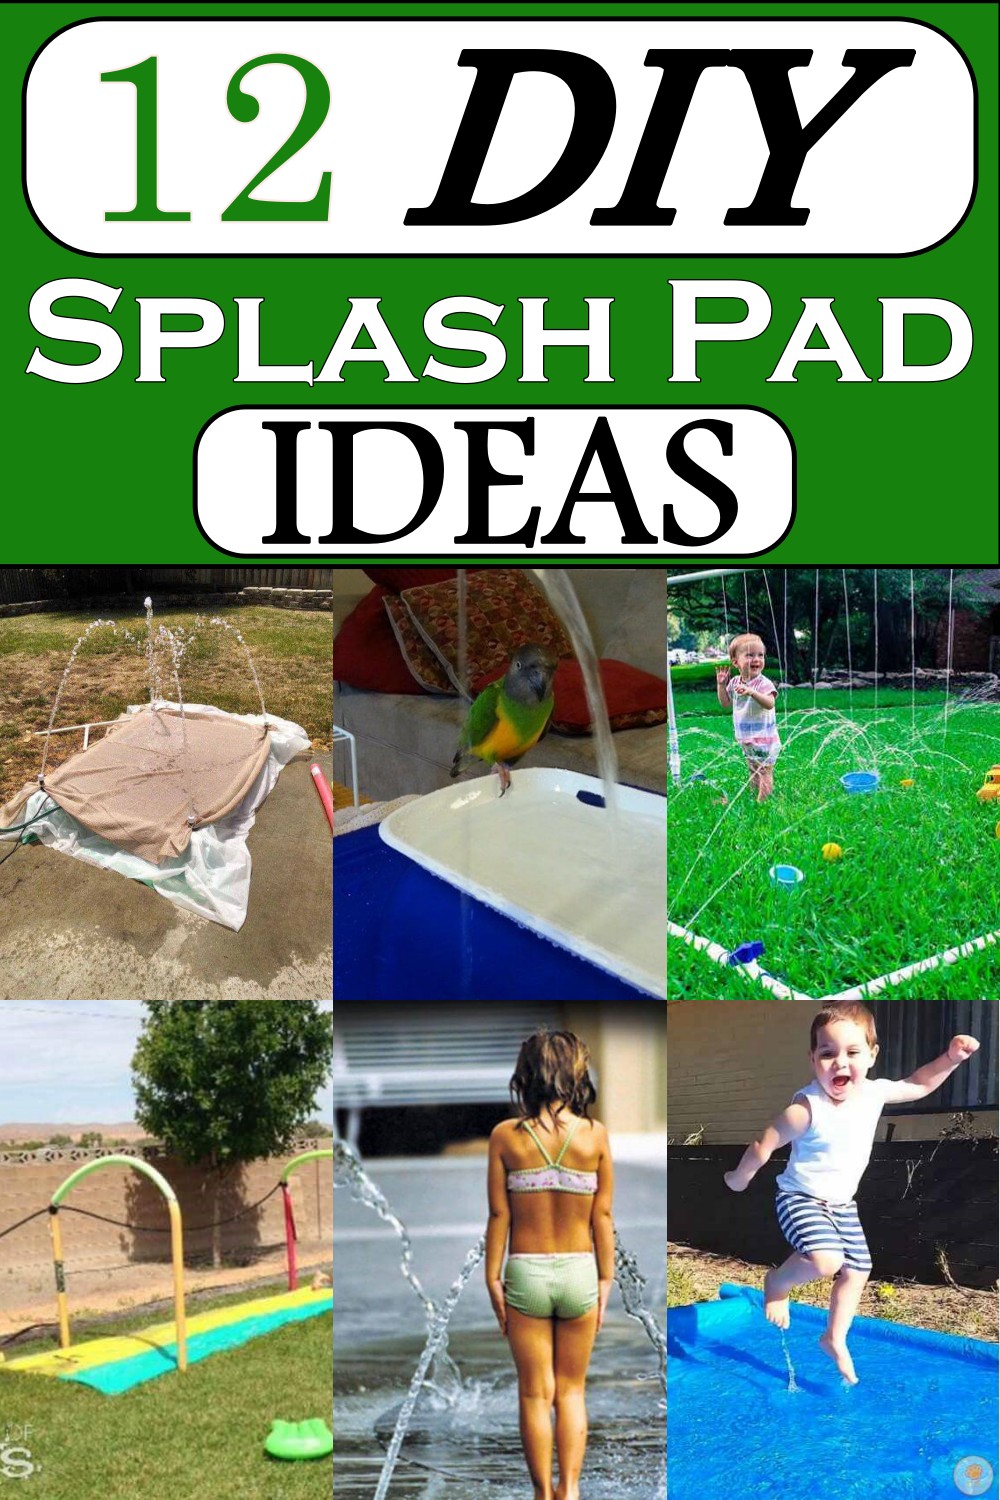 DIY Splash Pad Ideas